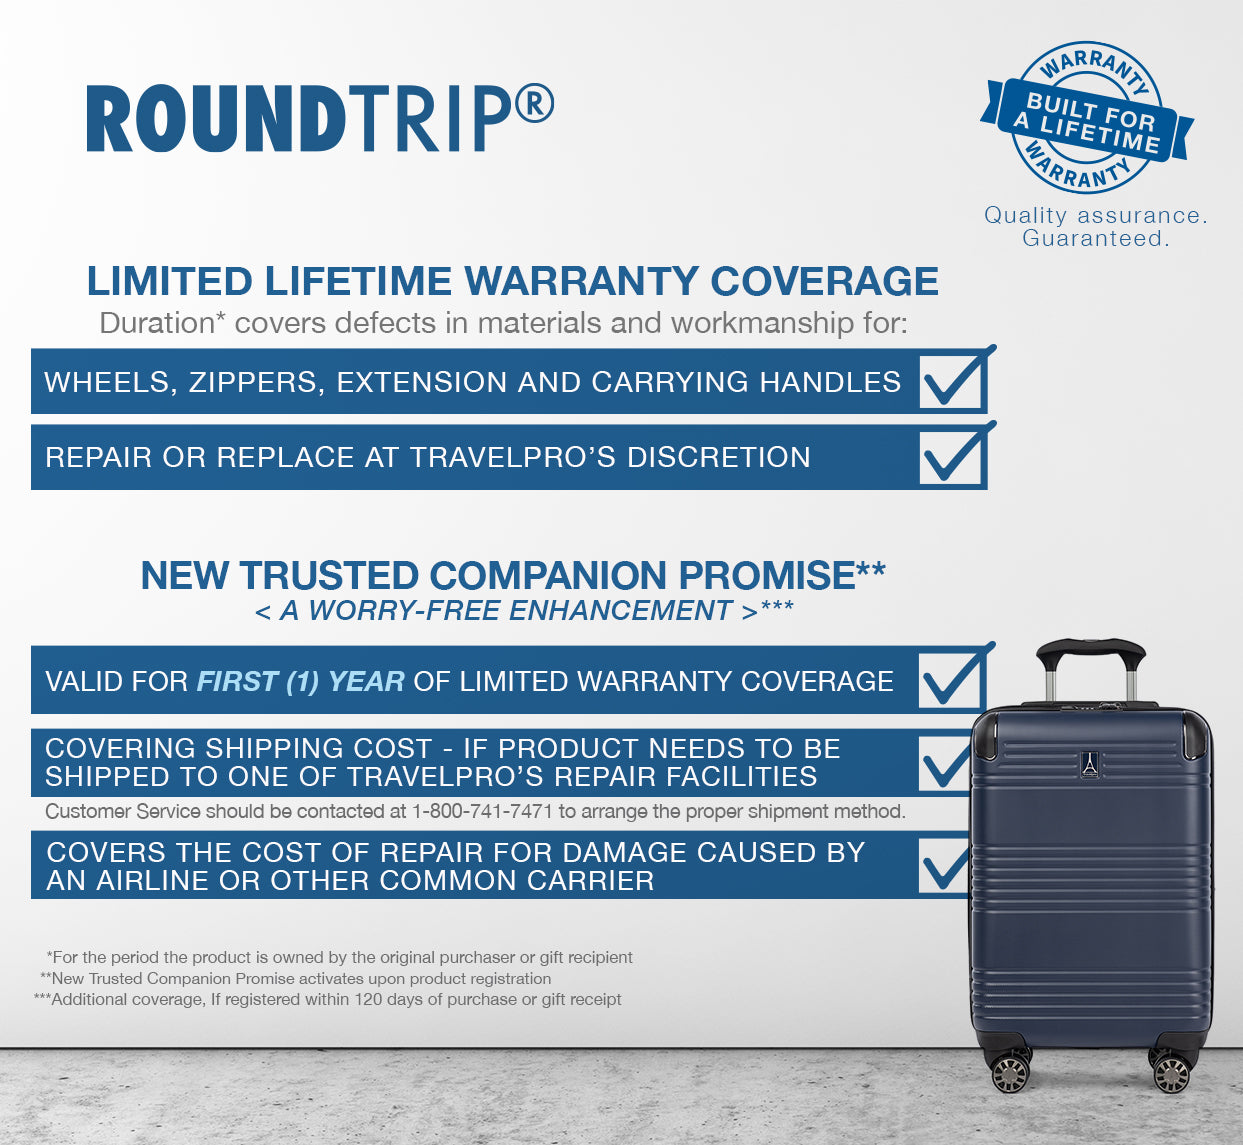 Travelpro® Roundtrip® Warranty Coverage